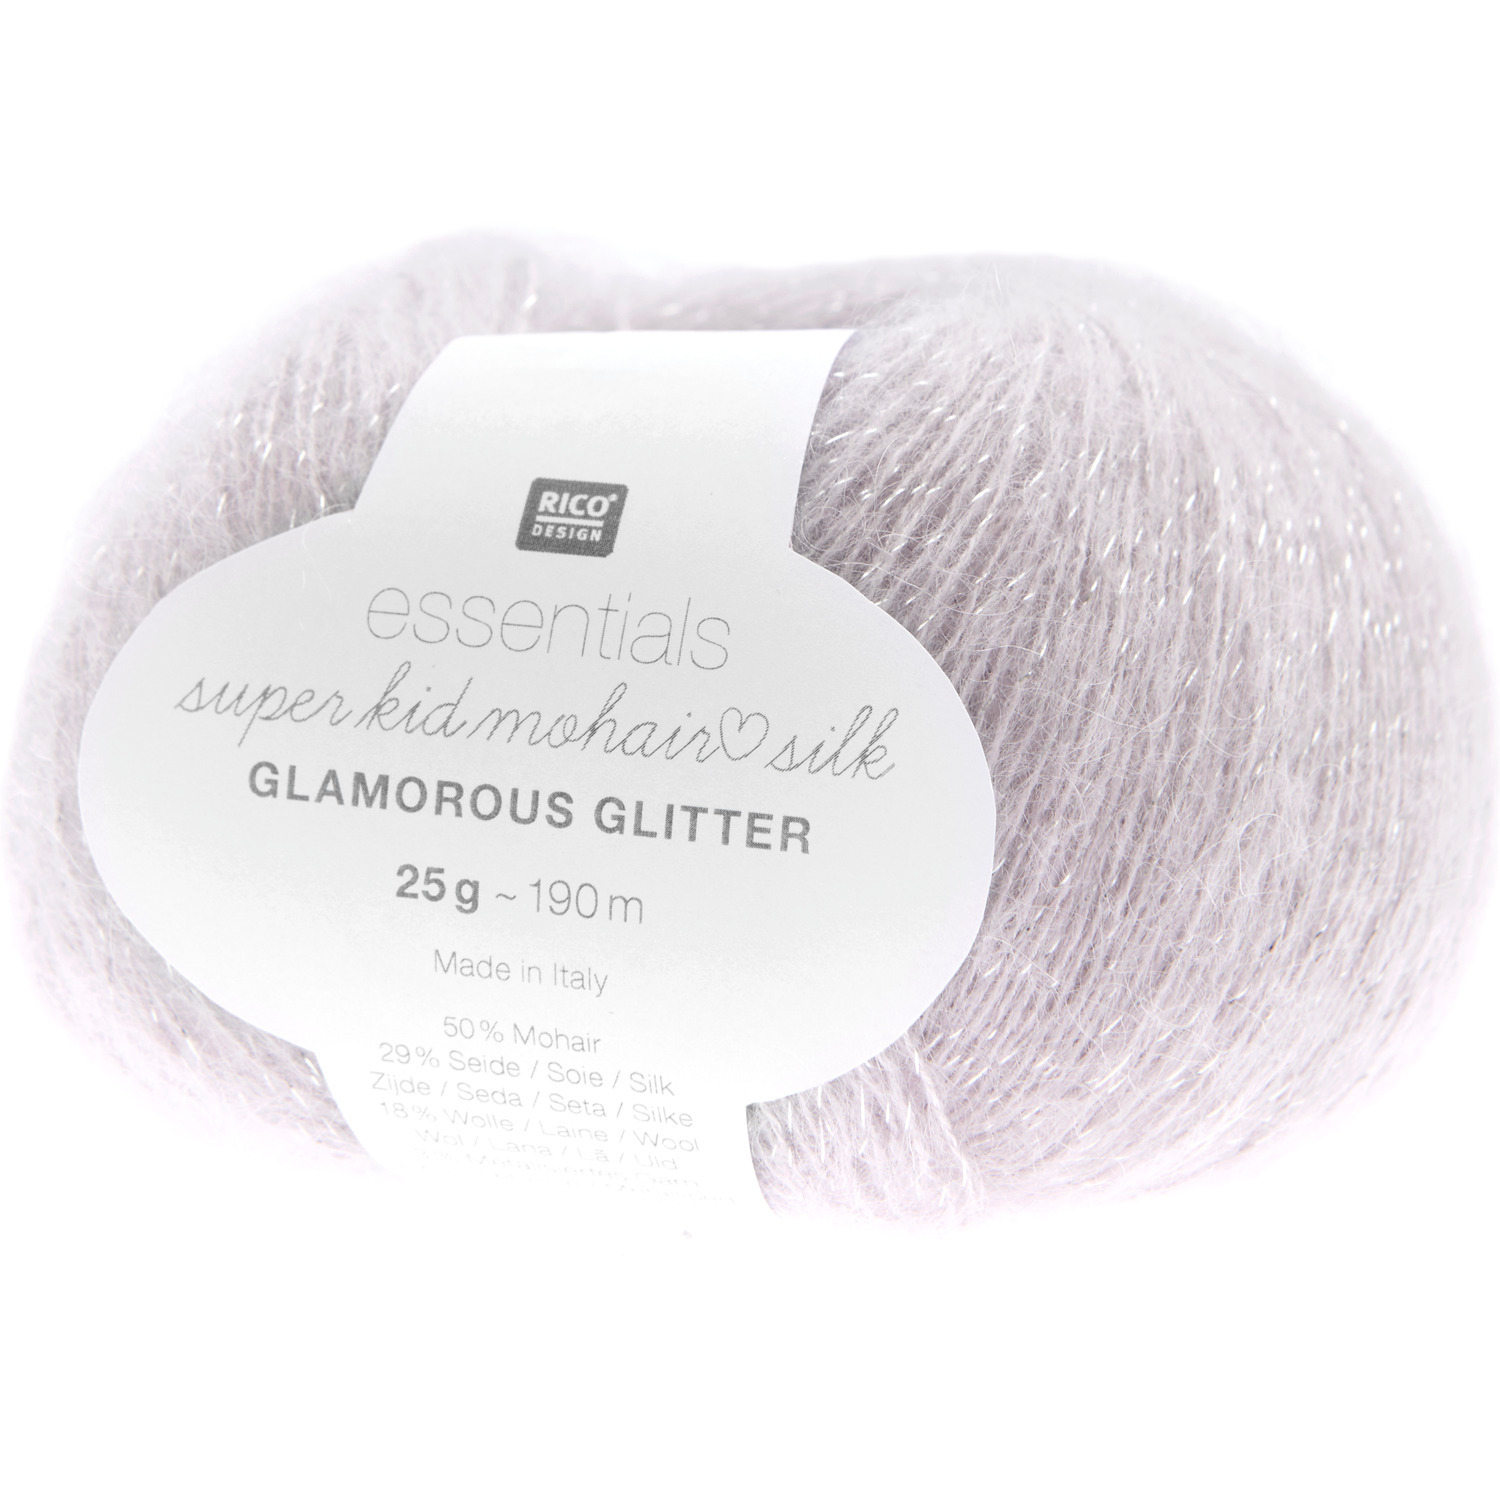 Essentials Super Kid Mohair Loves Silk Glamorous Glitter